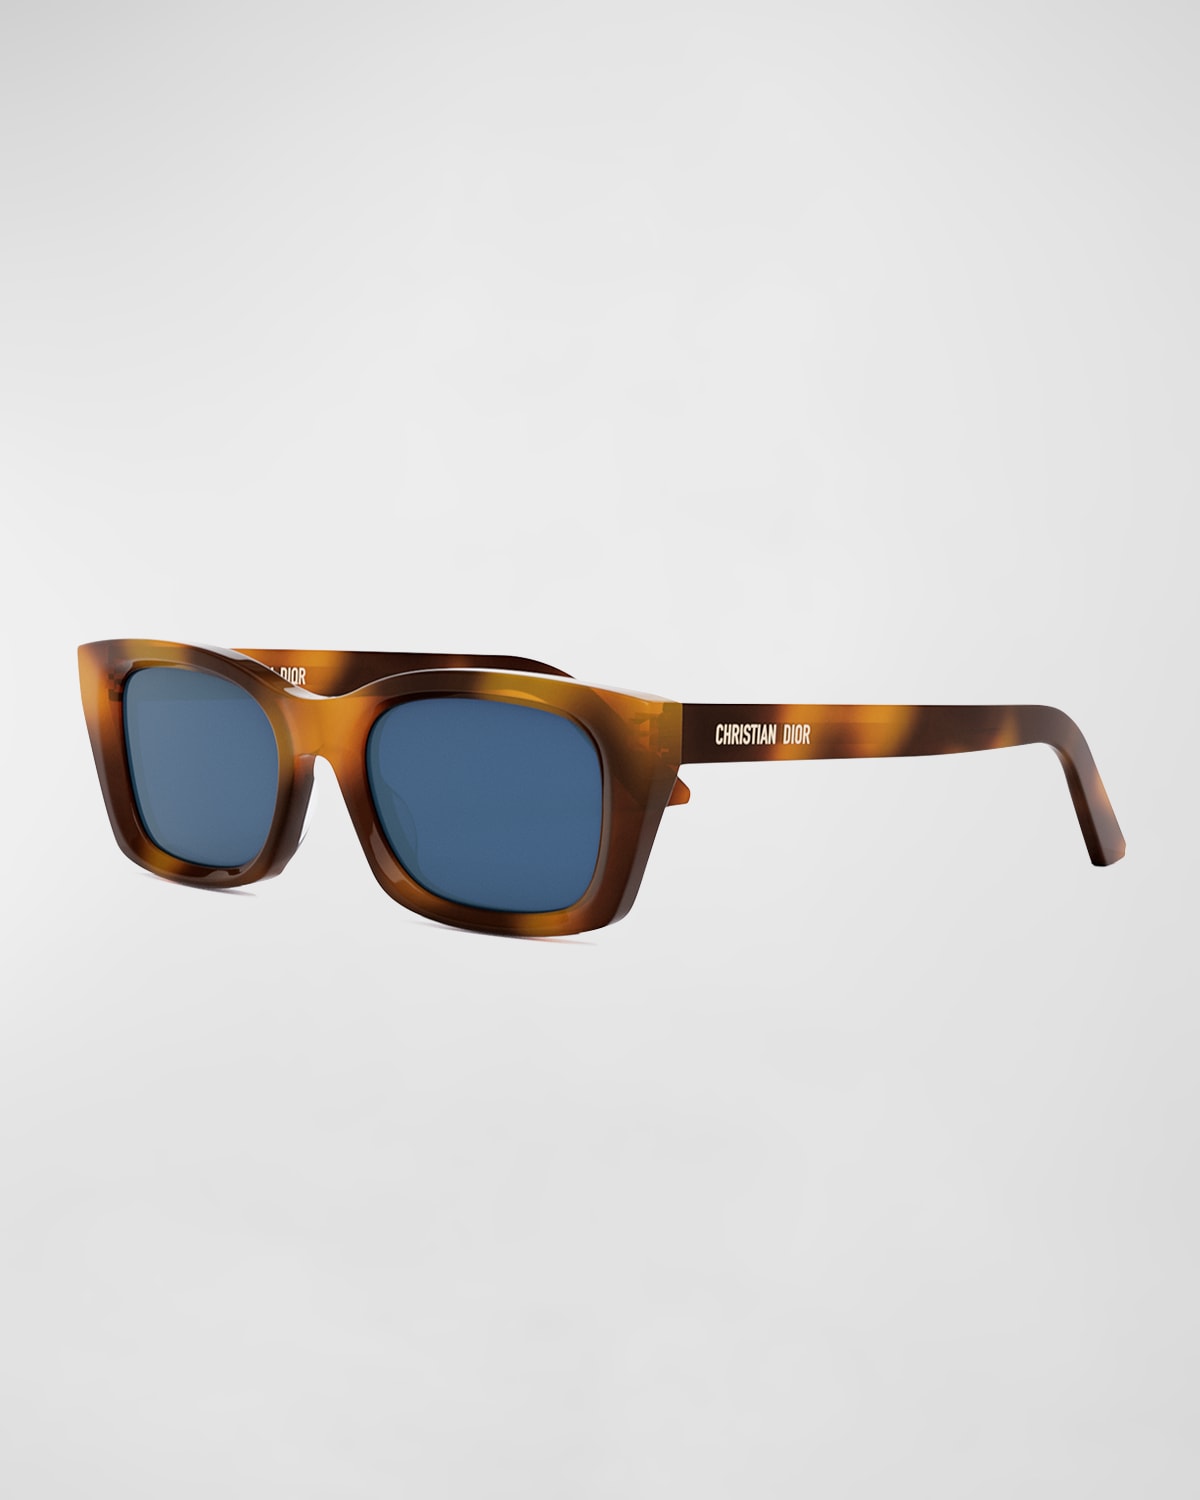 DiorMidnight S3I Sunglasses